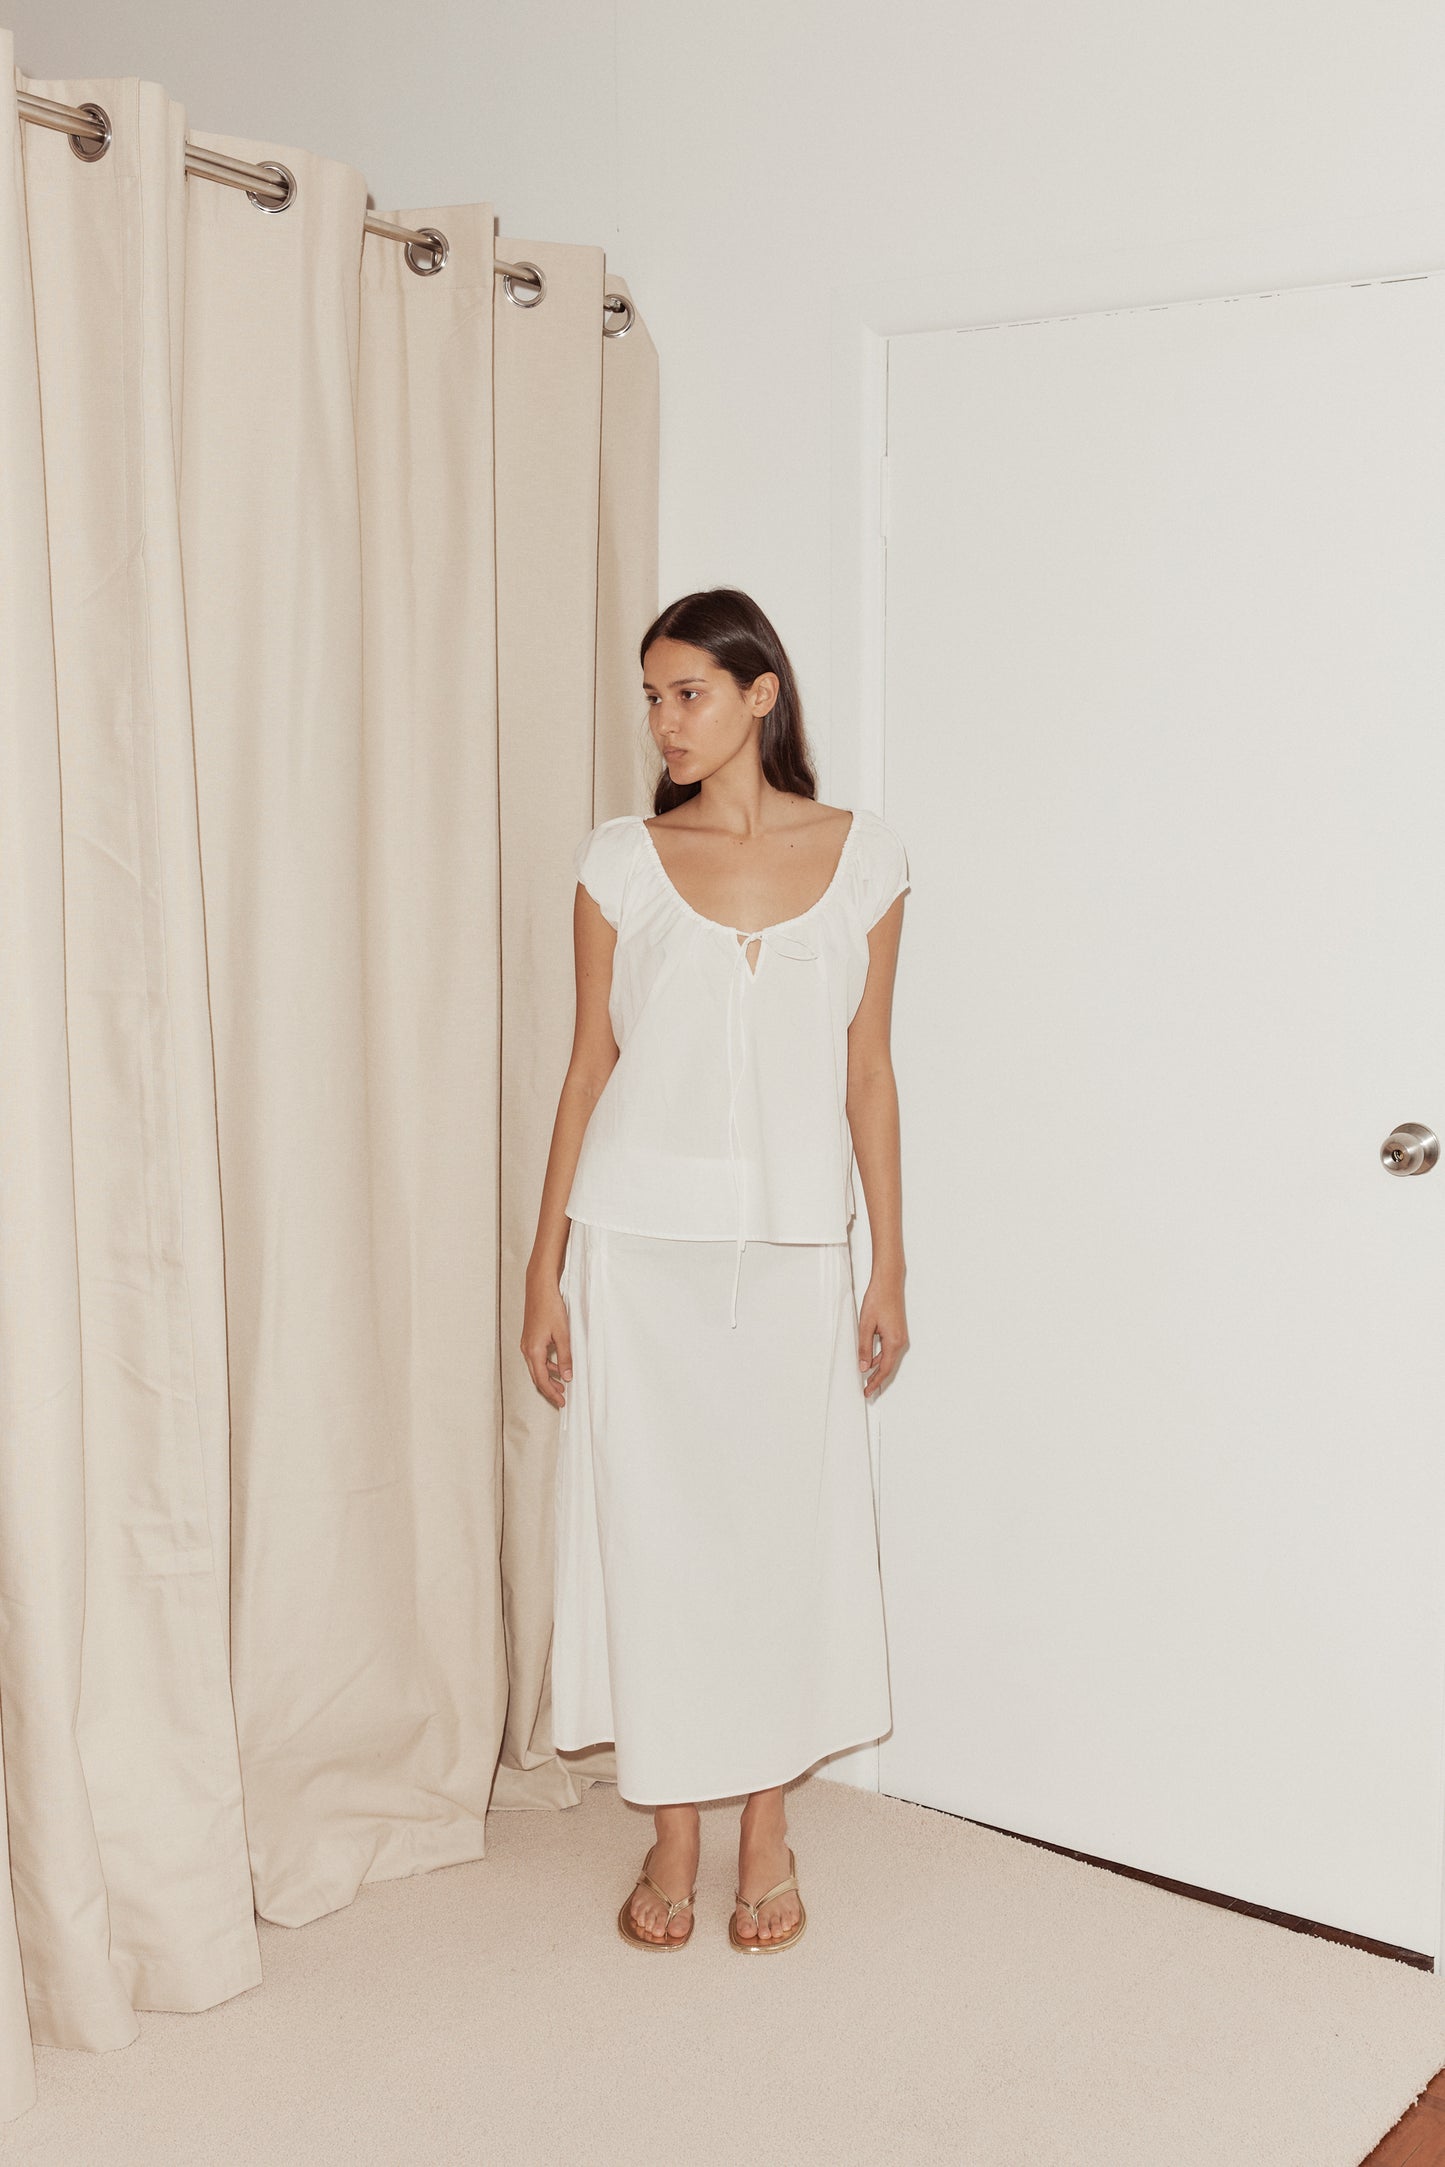 Female model wearing One Panel Top - White by Deiji Studios against plain background